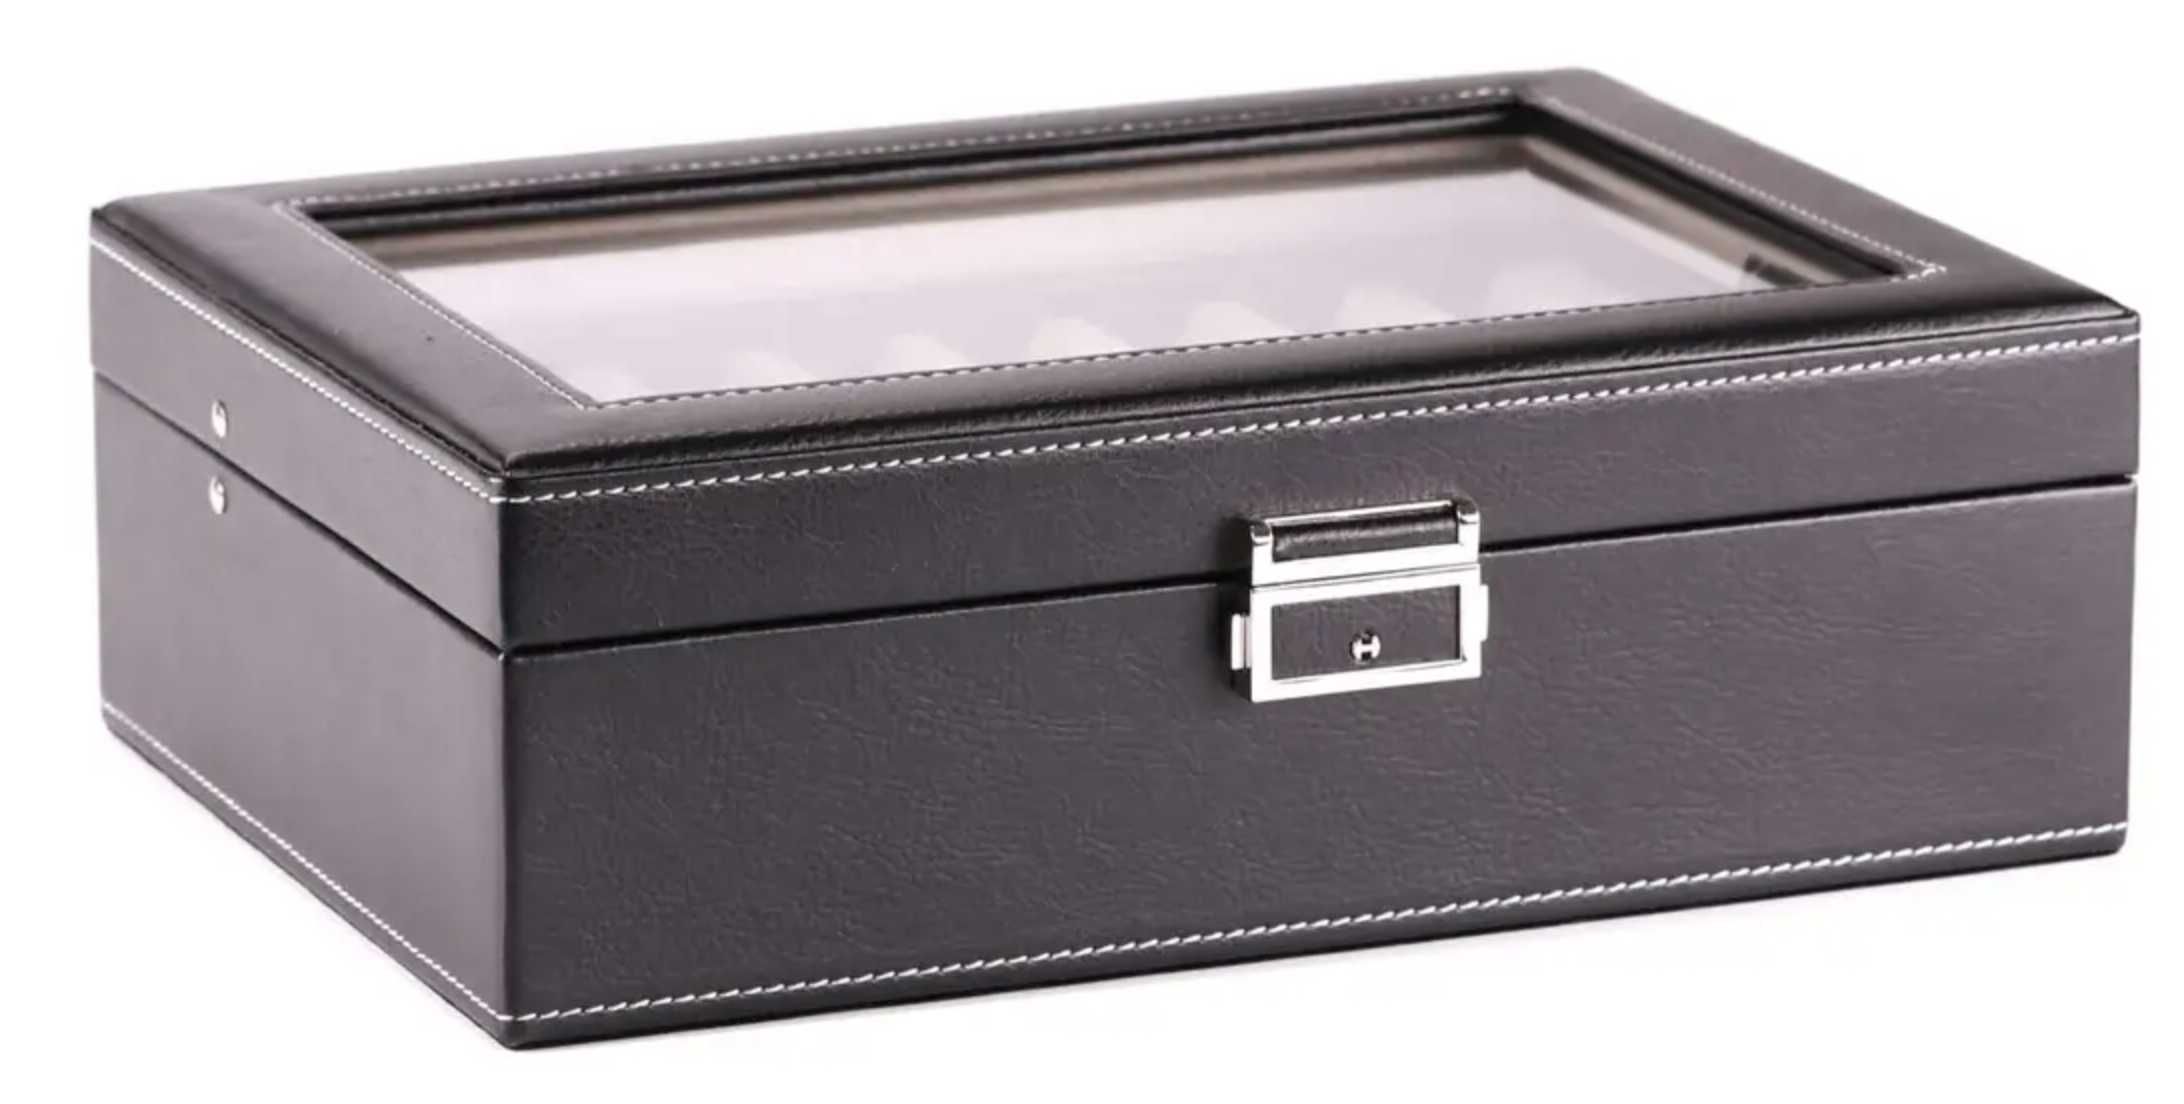 Скринька для ручок / бокс футляр органайзер шкатулка для ручек parker